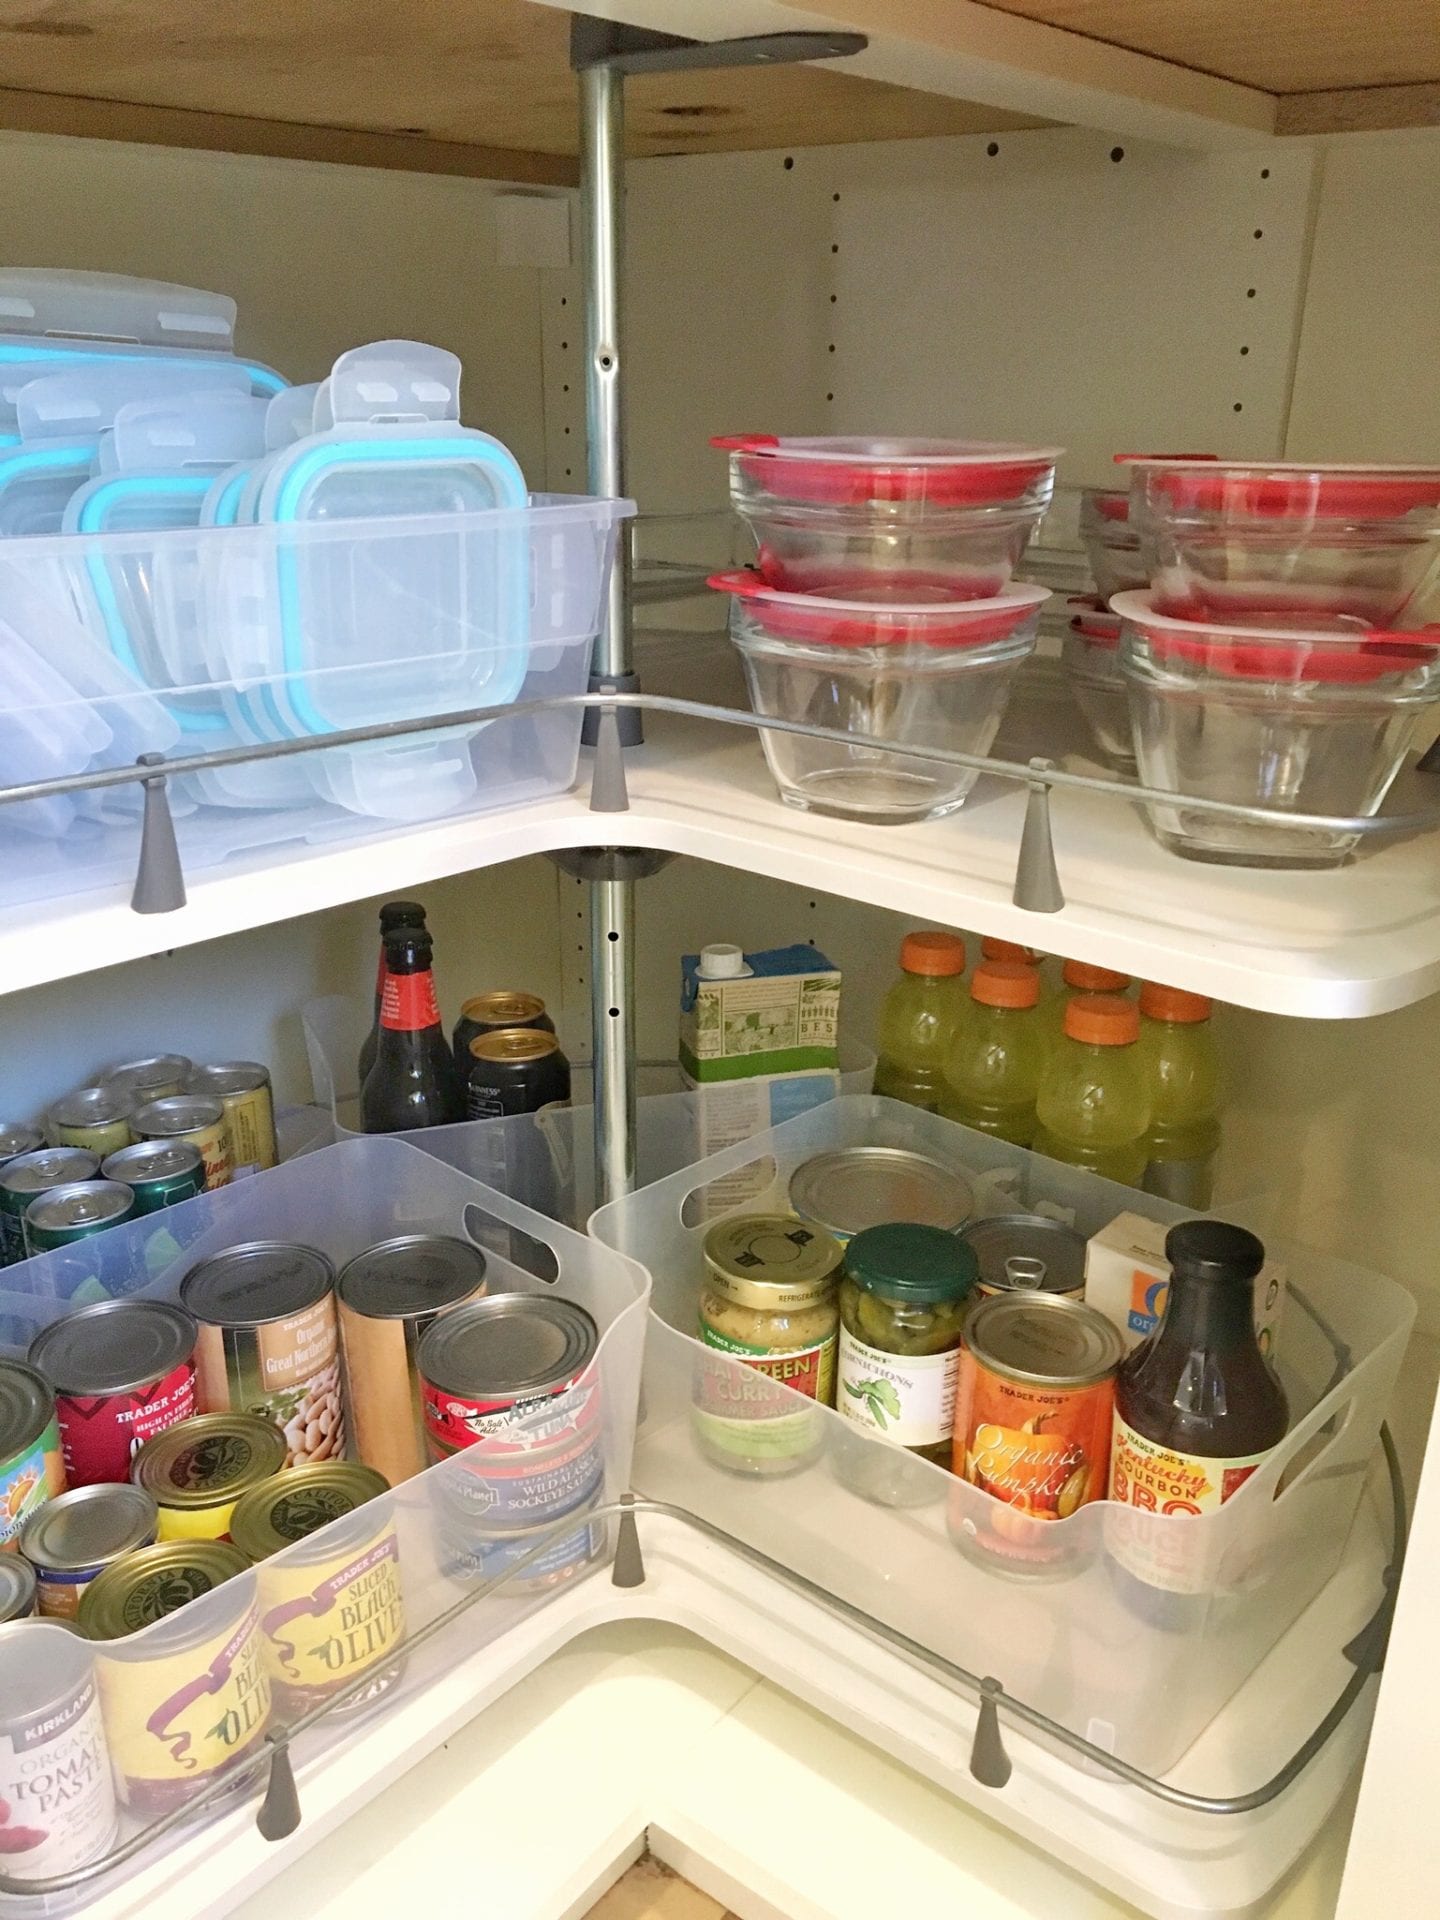 professional organizer help with tidy kitchen cabinet pantry storage and organized kitchen Tupperware